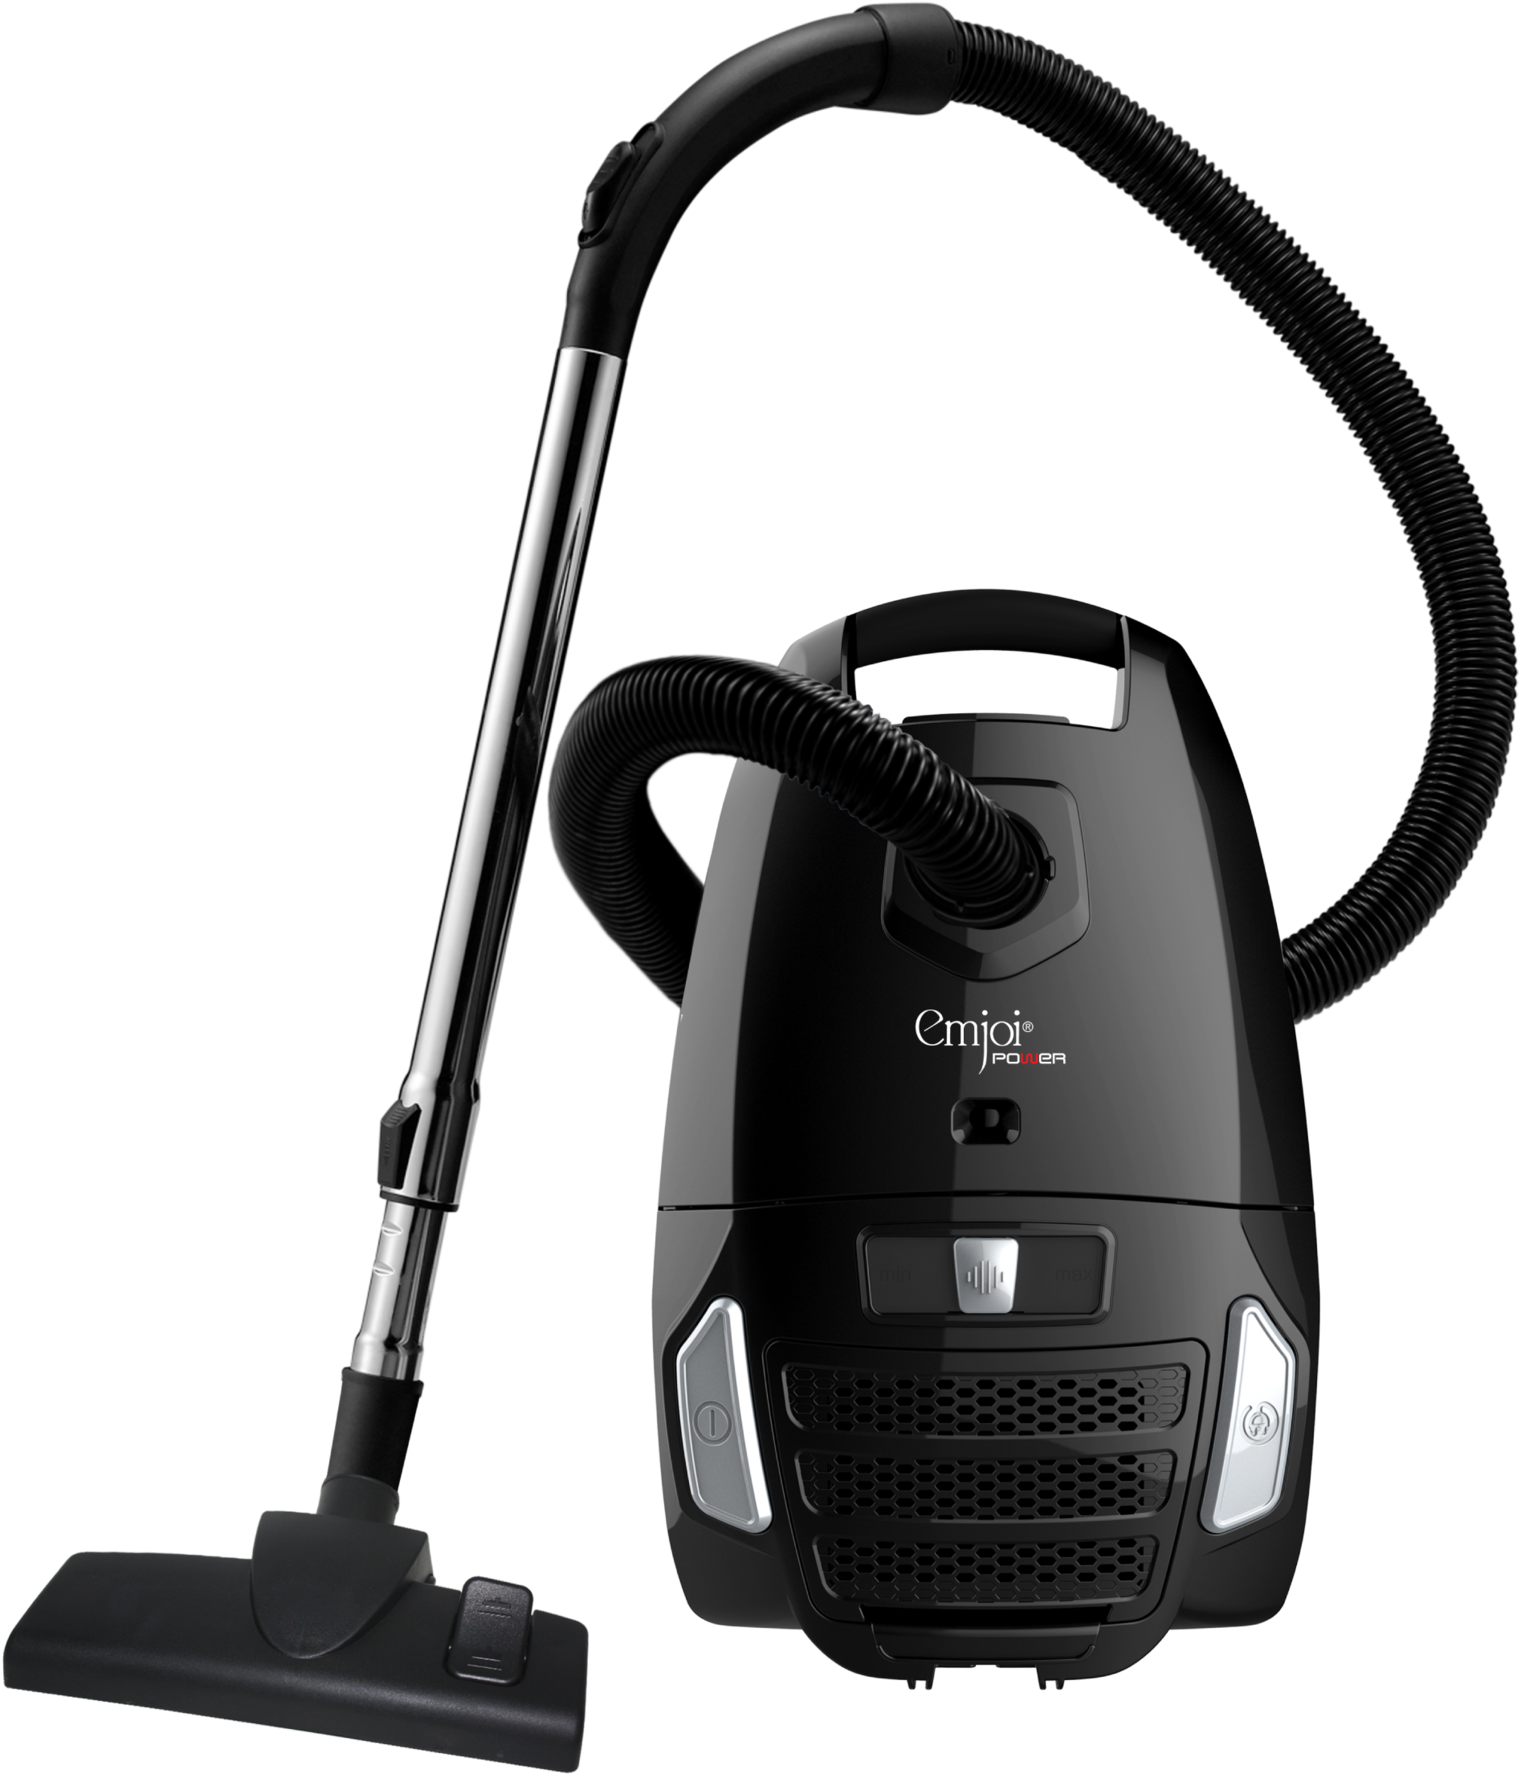 Black Vacuum Cleaner Png Image - مكنسة امجوي (1700x1841), Png Download